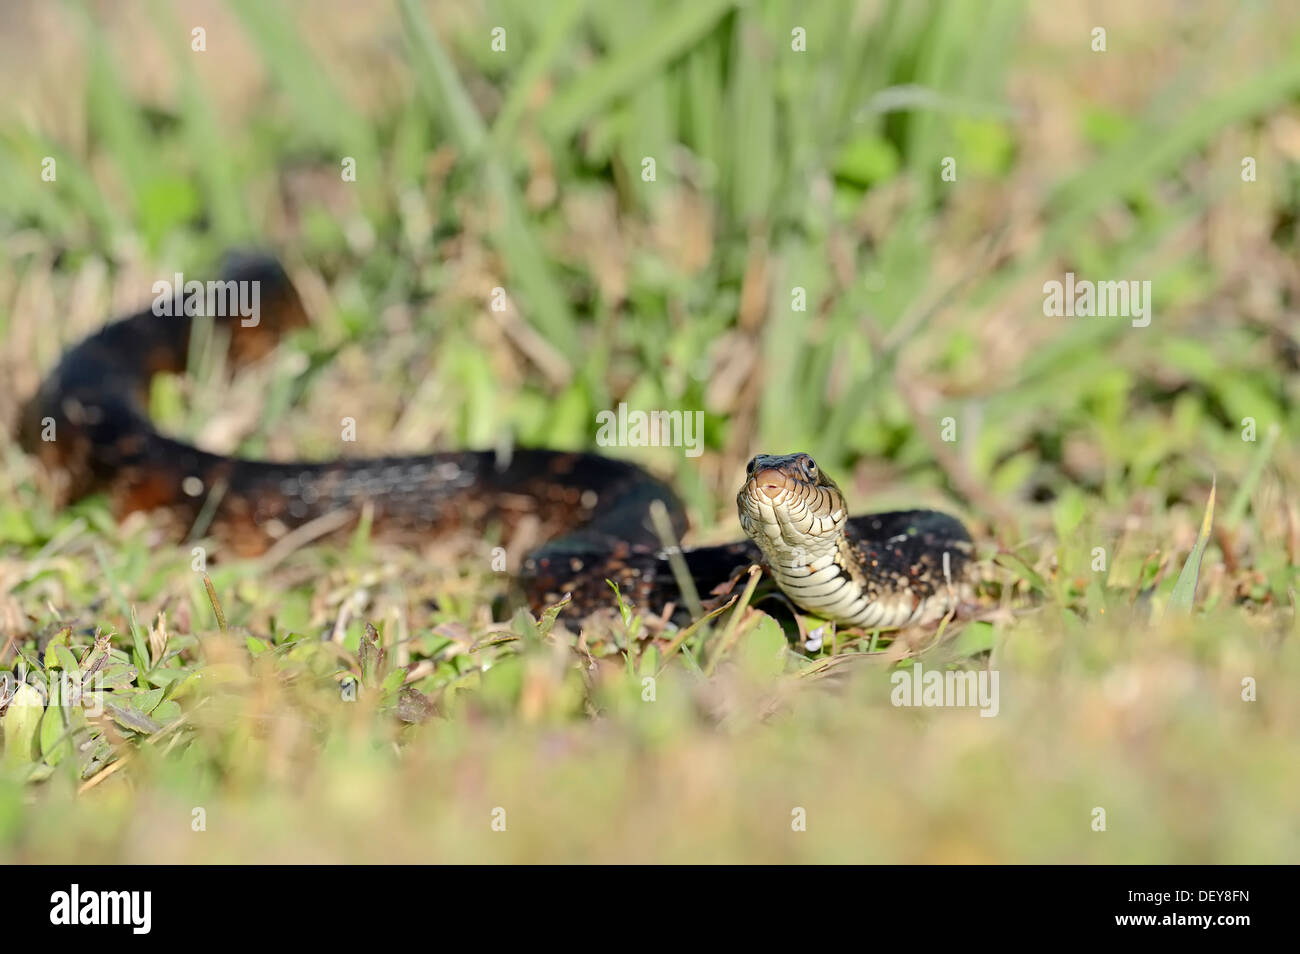 Florida Banded Water Snake (Nerodia fasciata pictiventris), Florida, United States Stock Photo